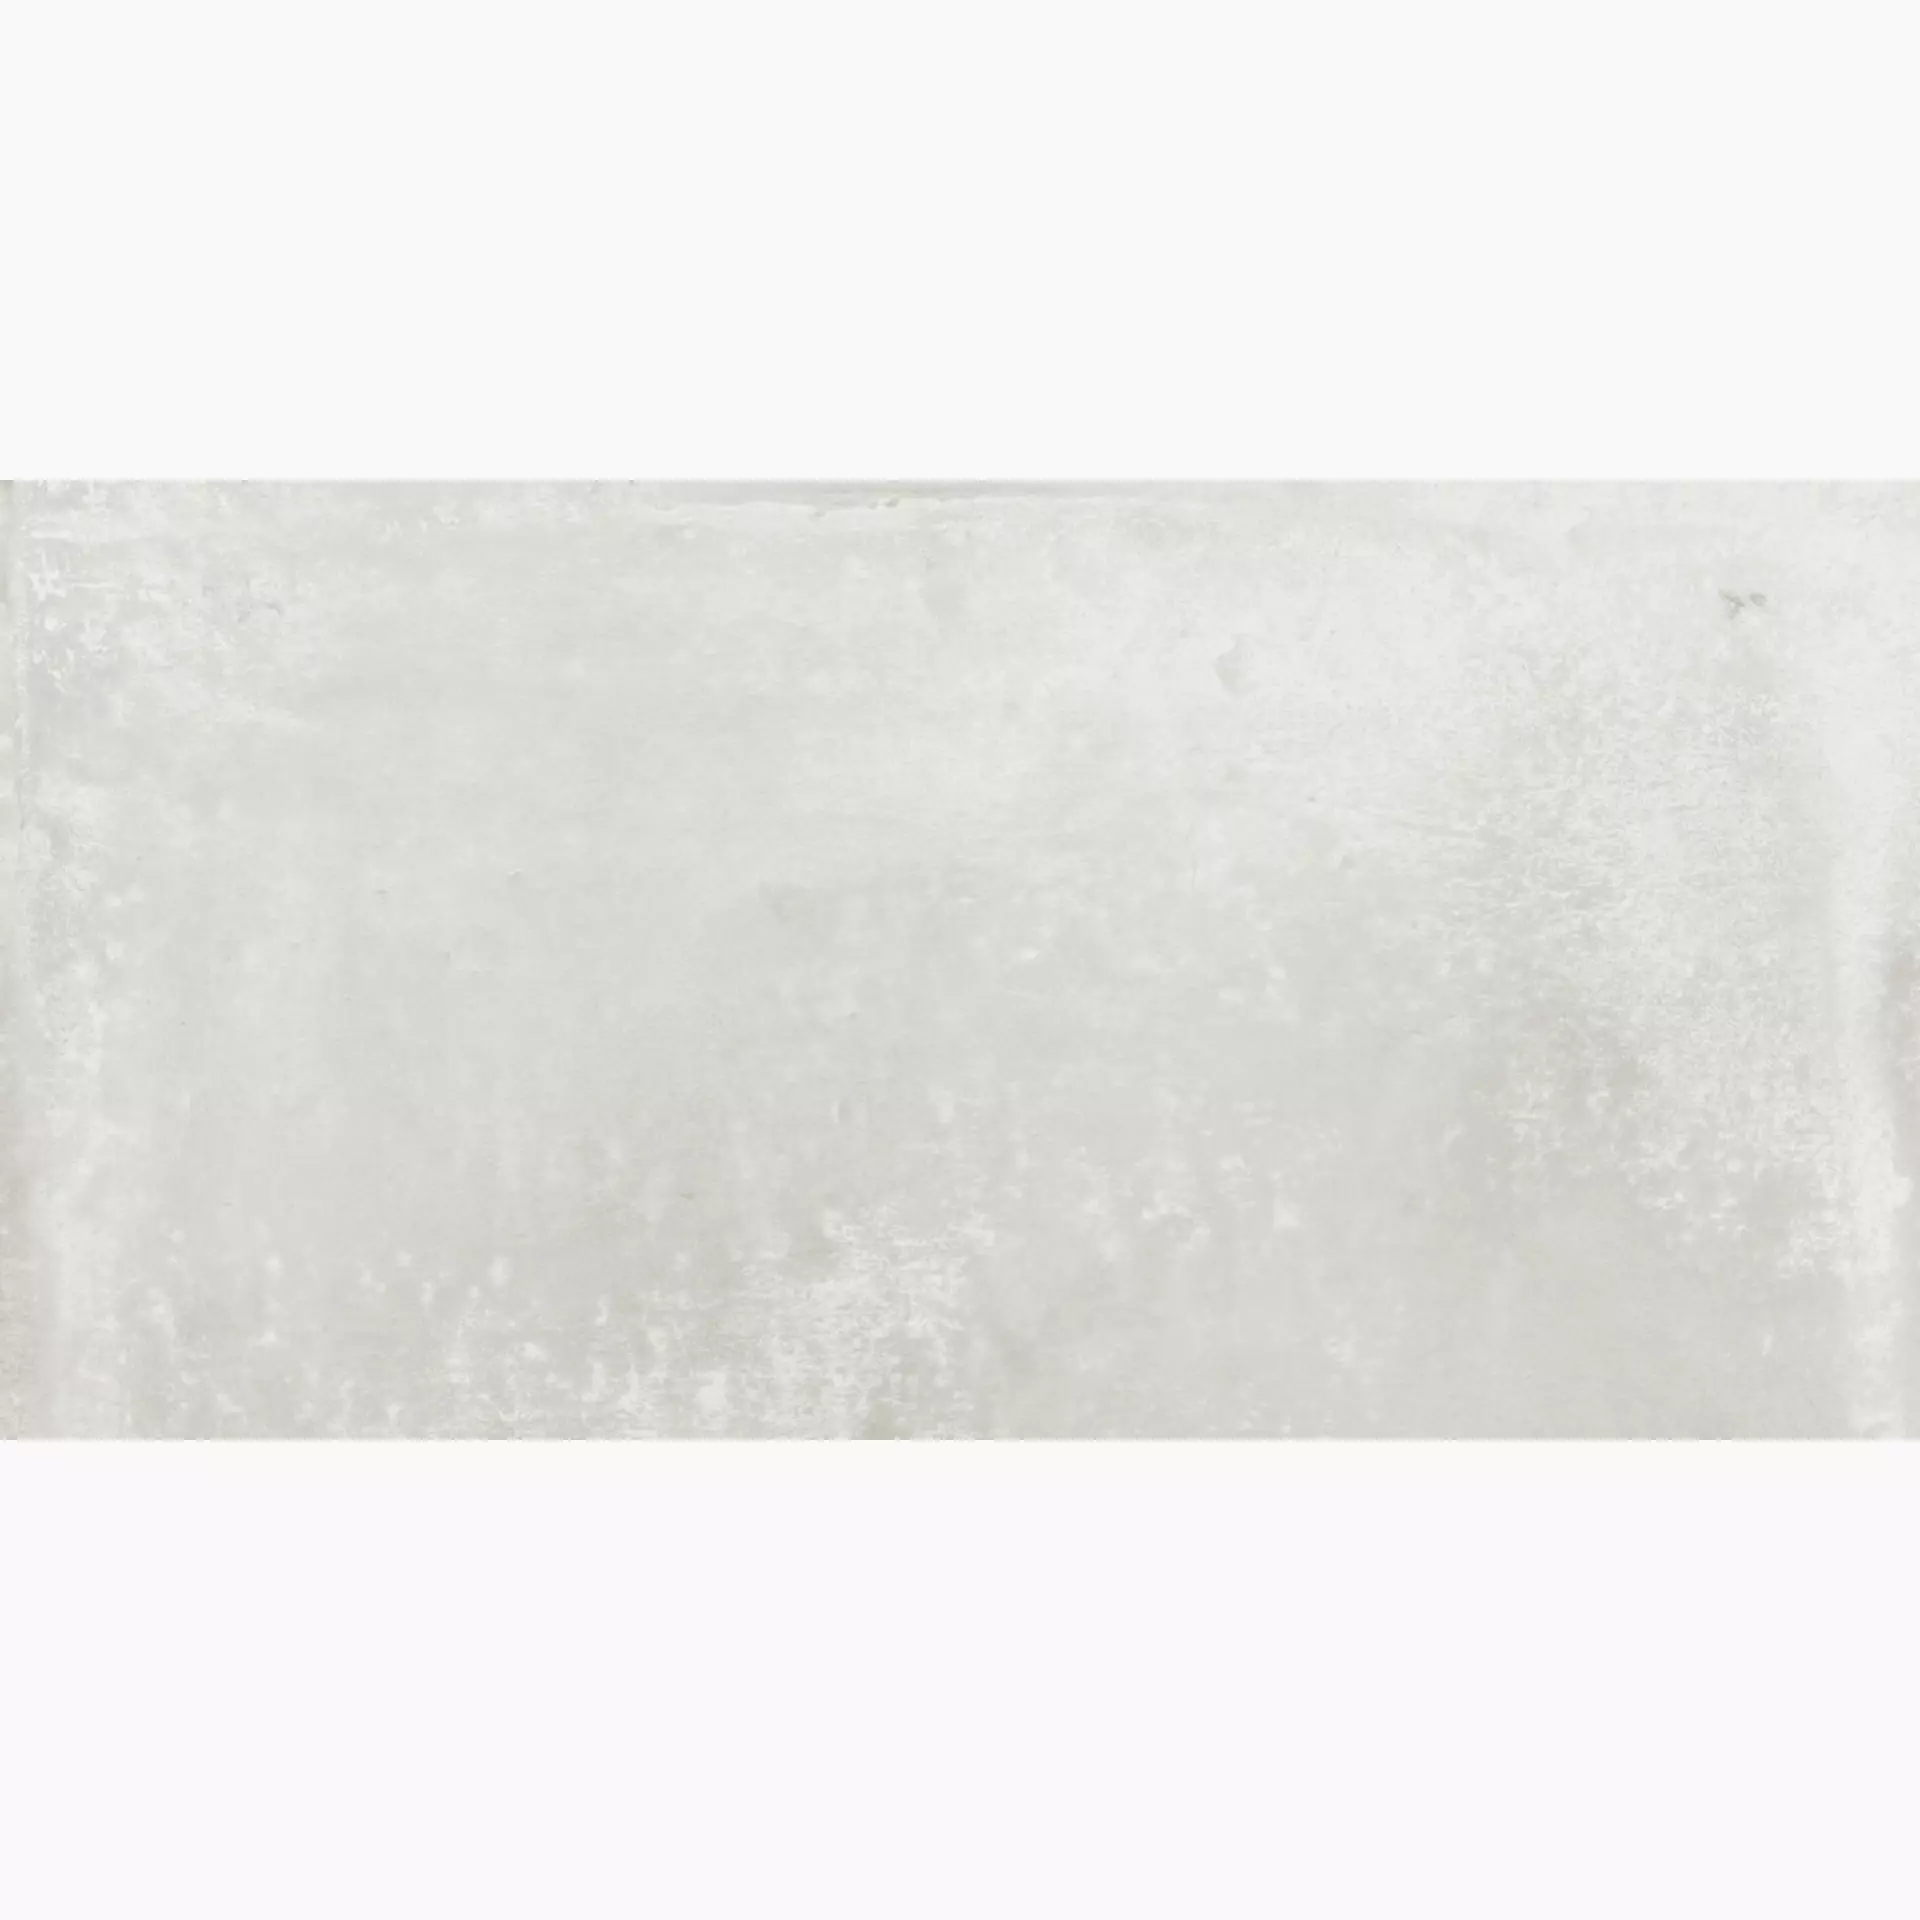 Diesel Alurock White Naturale – Matt 892759 60x120cm rectified 9mm